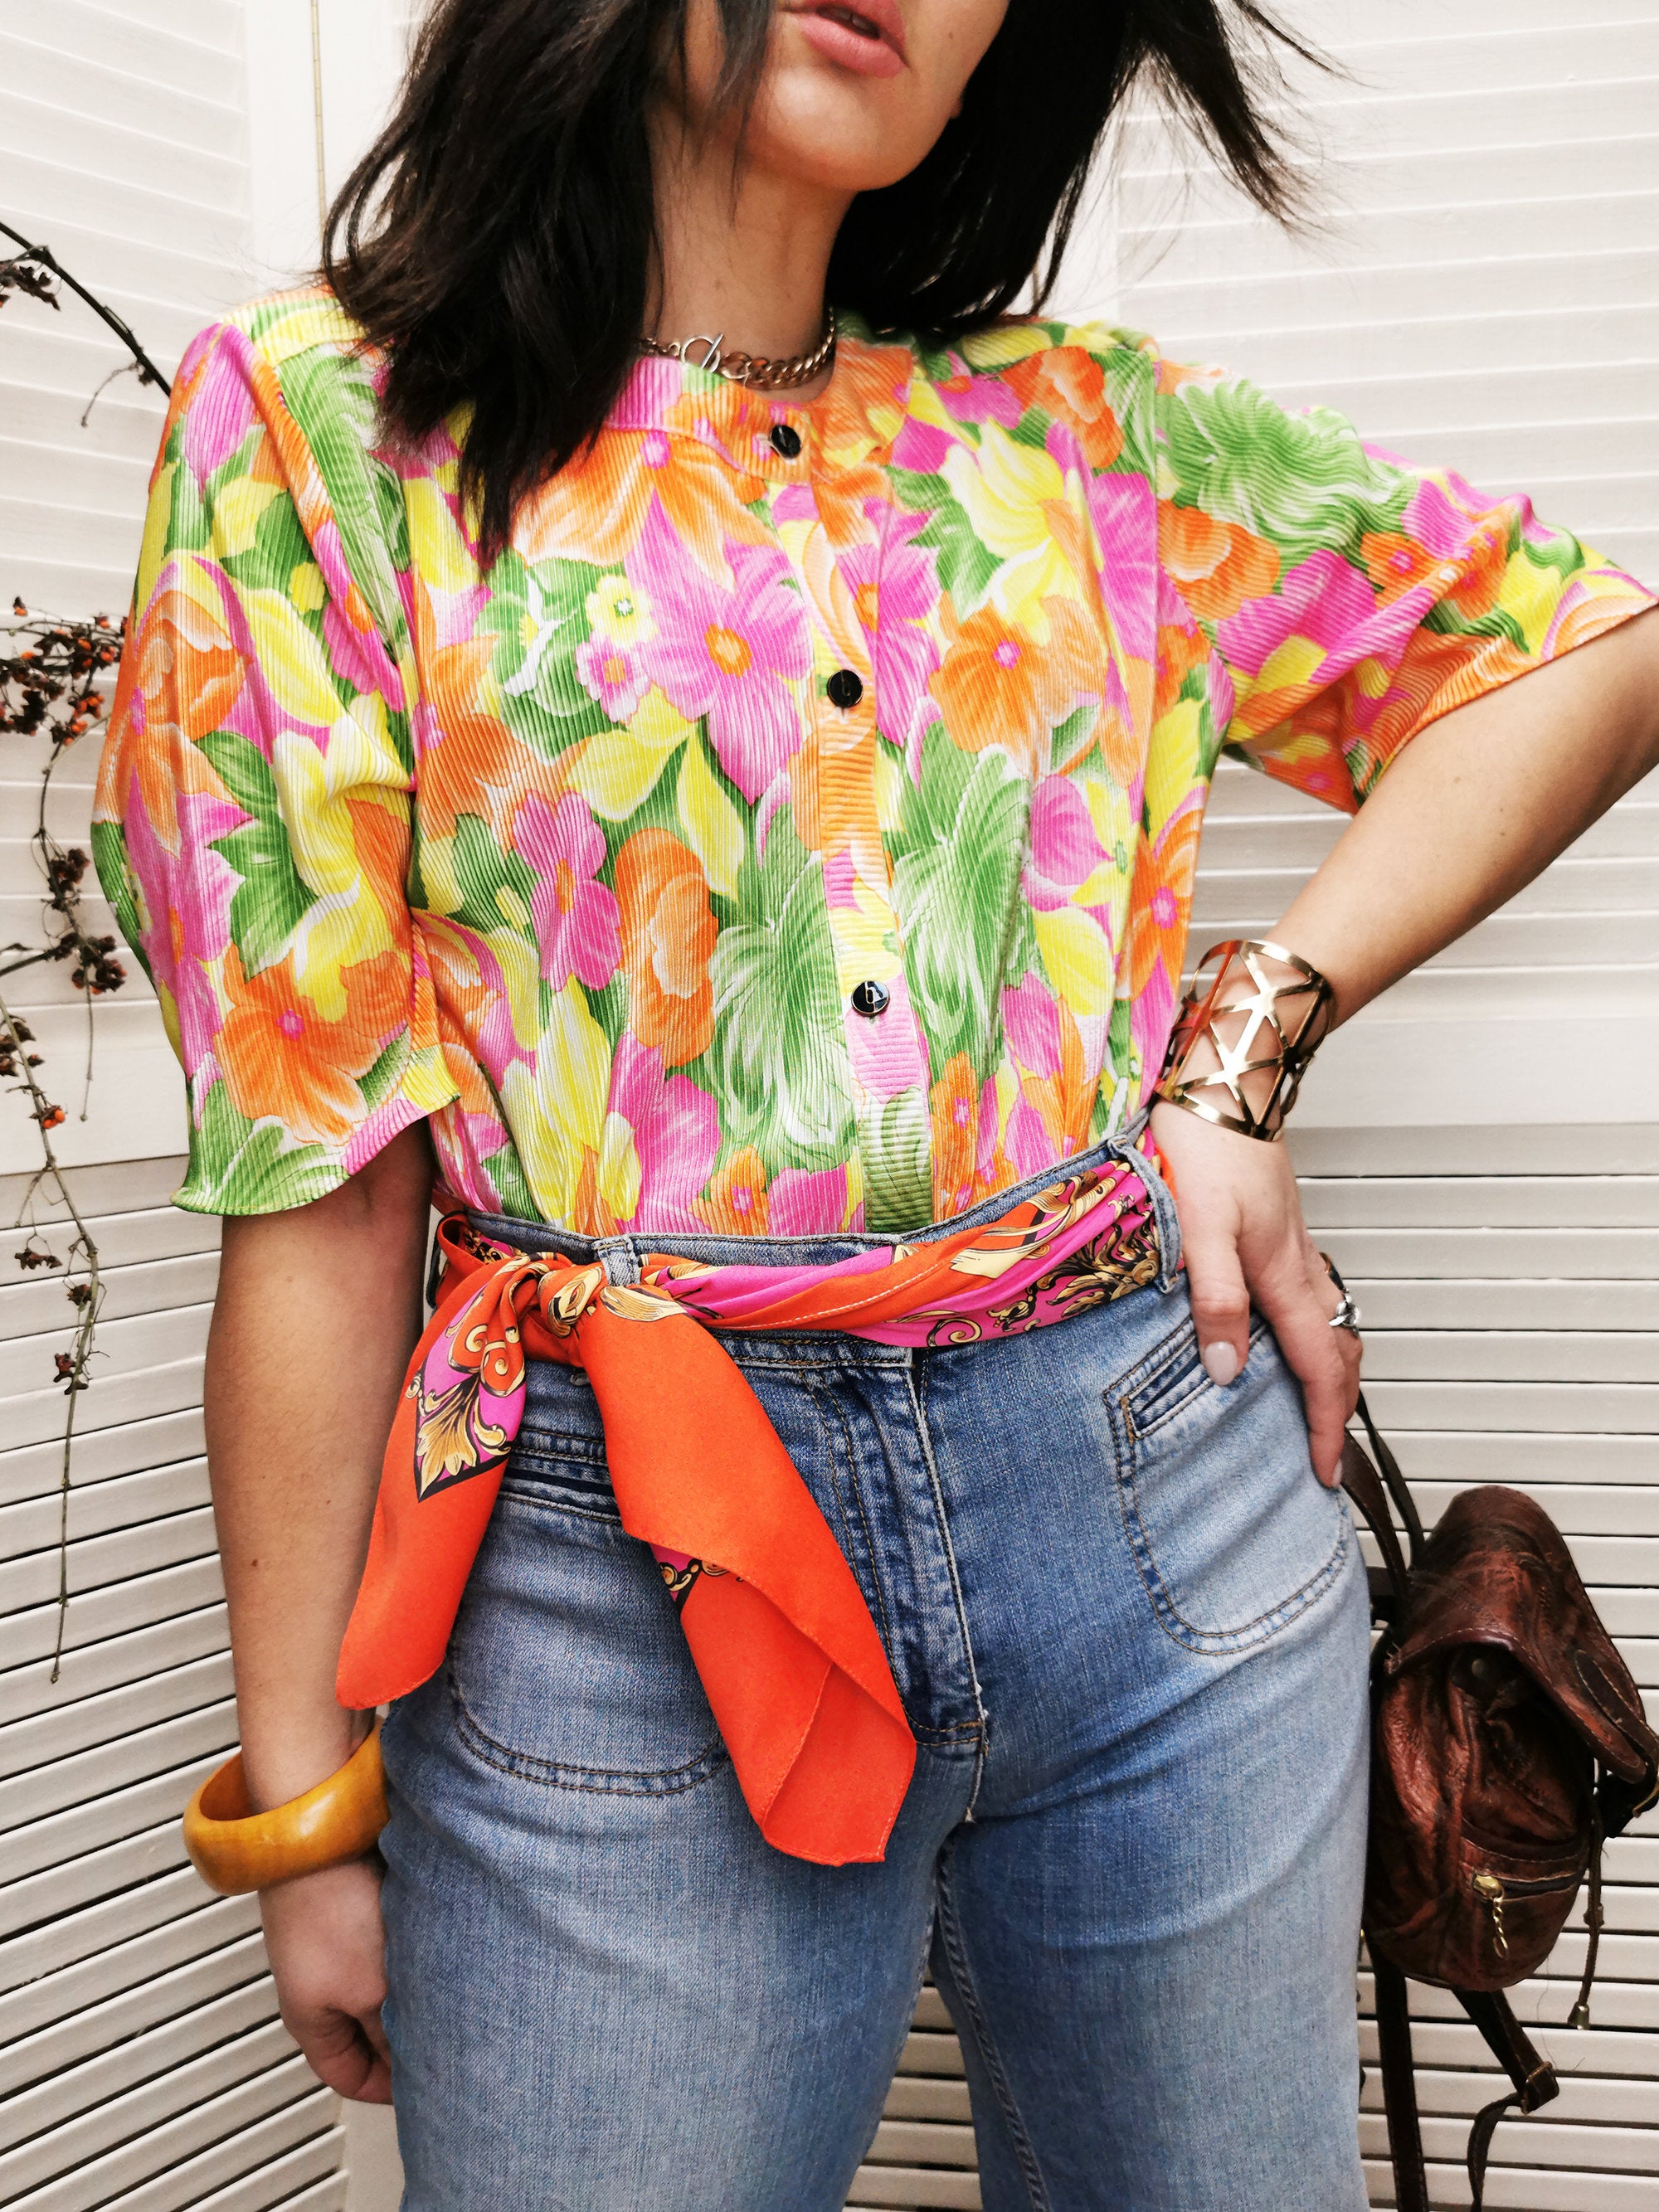 Vintage 80s colorful floral print short sleeve blouse top